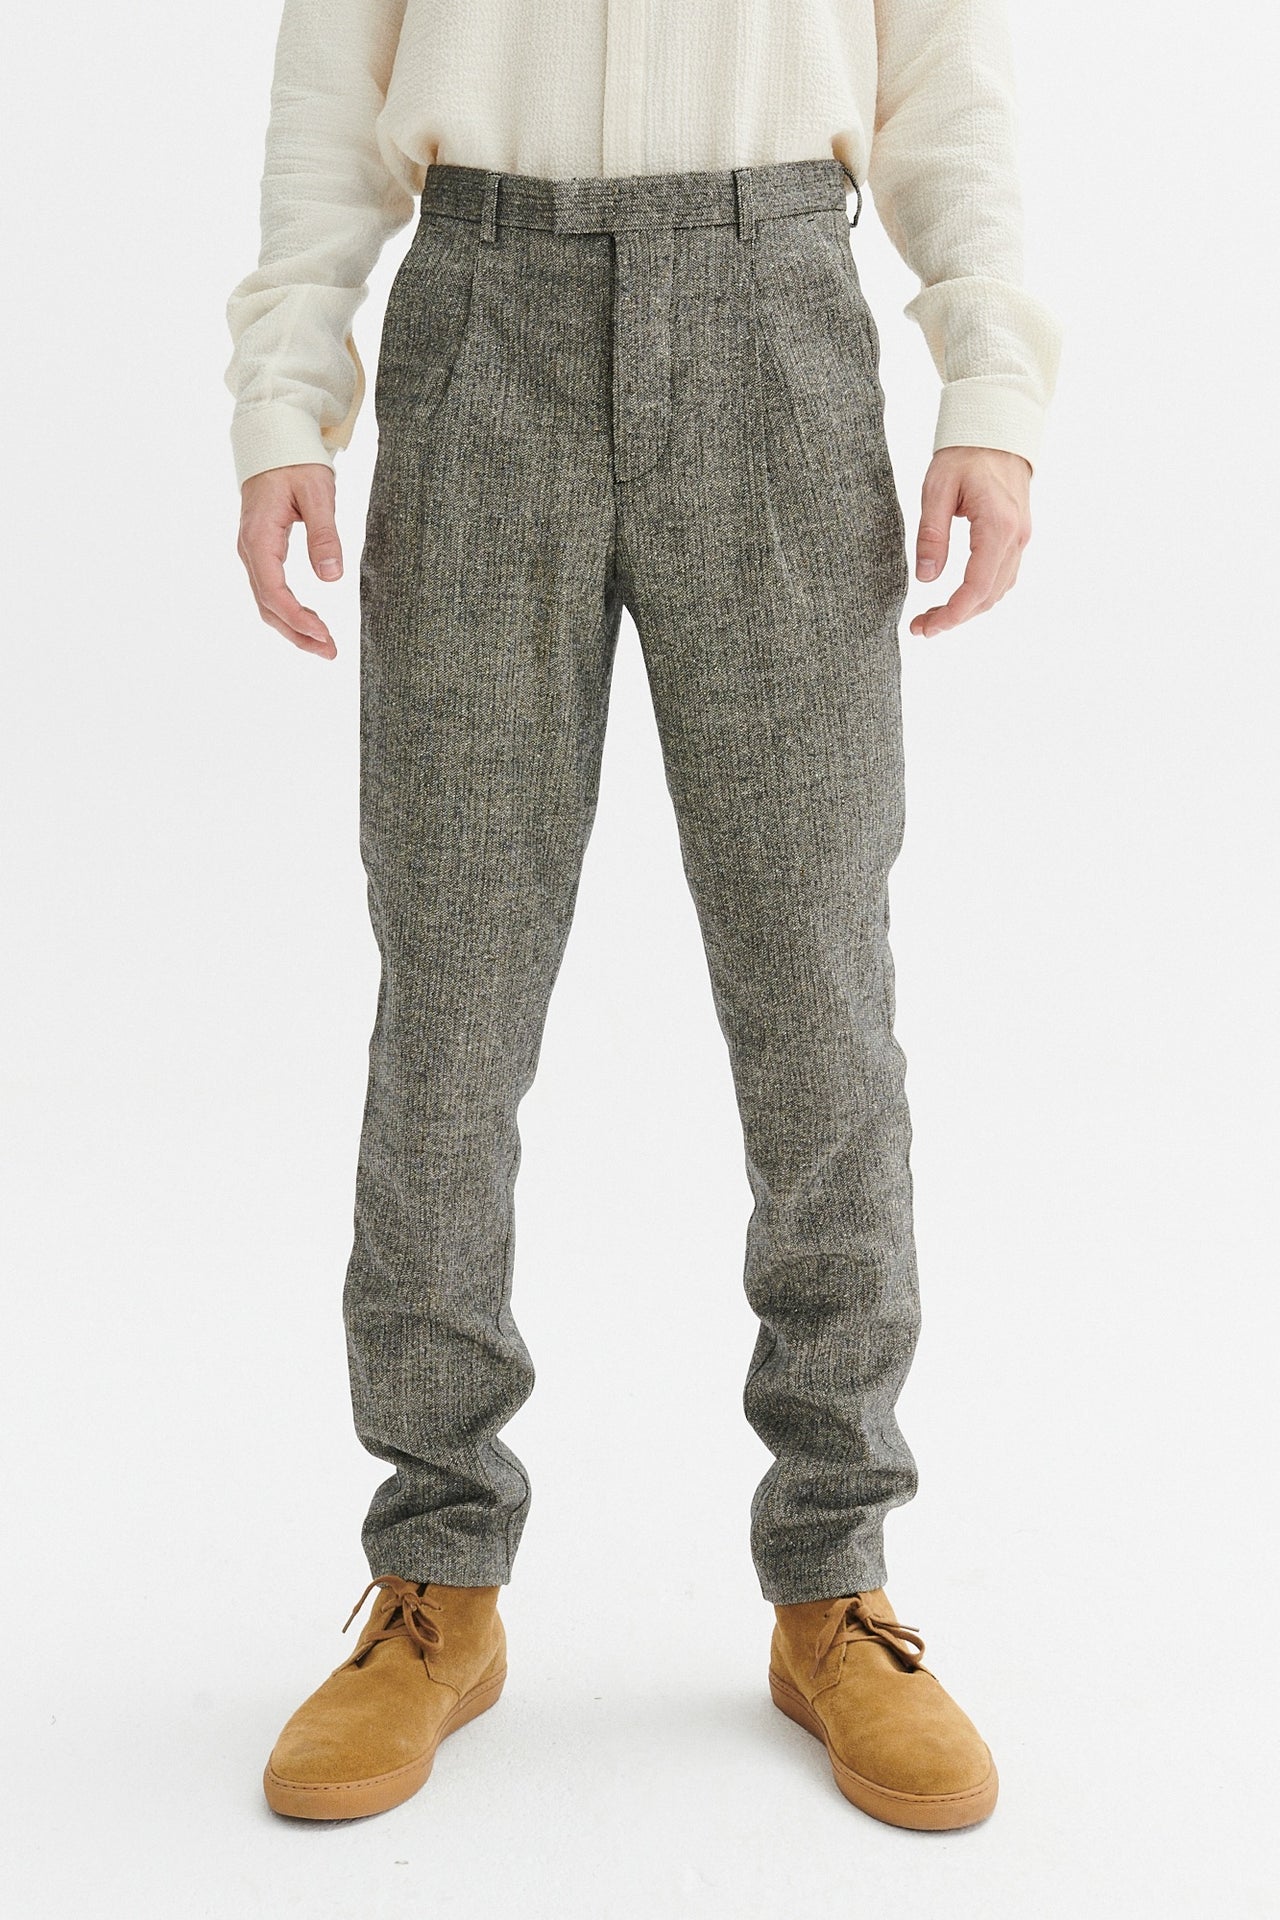 Bohemian Trousers in a Grey Herringbone Italian Wool and Silk